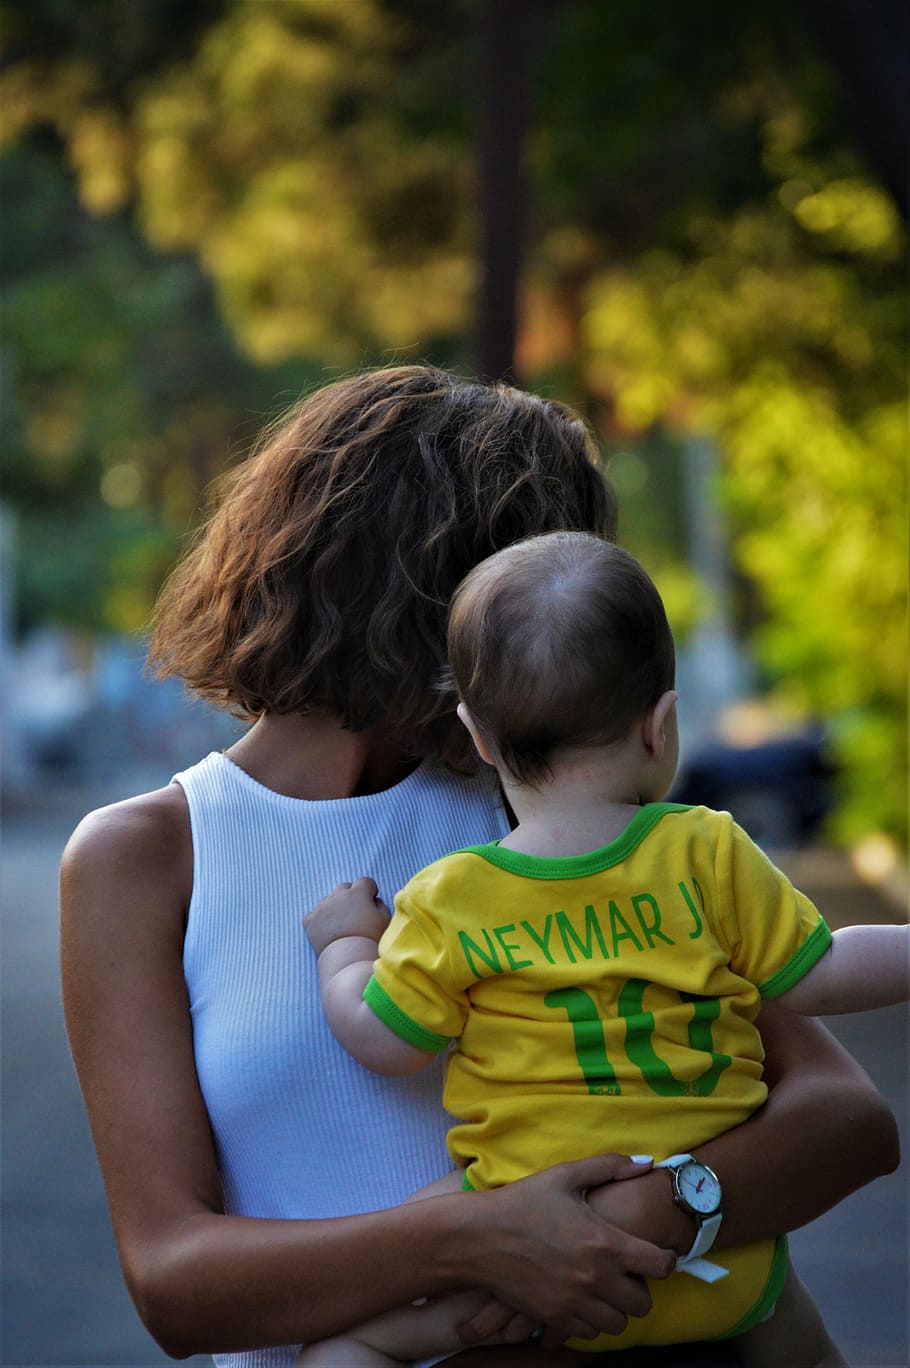 HD wallpaper: woman carrying baby, neymar, brazil, brasil, brazilian, football - Wallpaper Flare